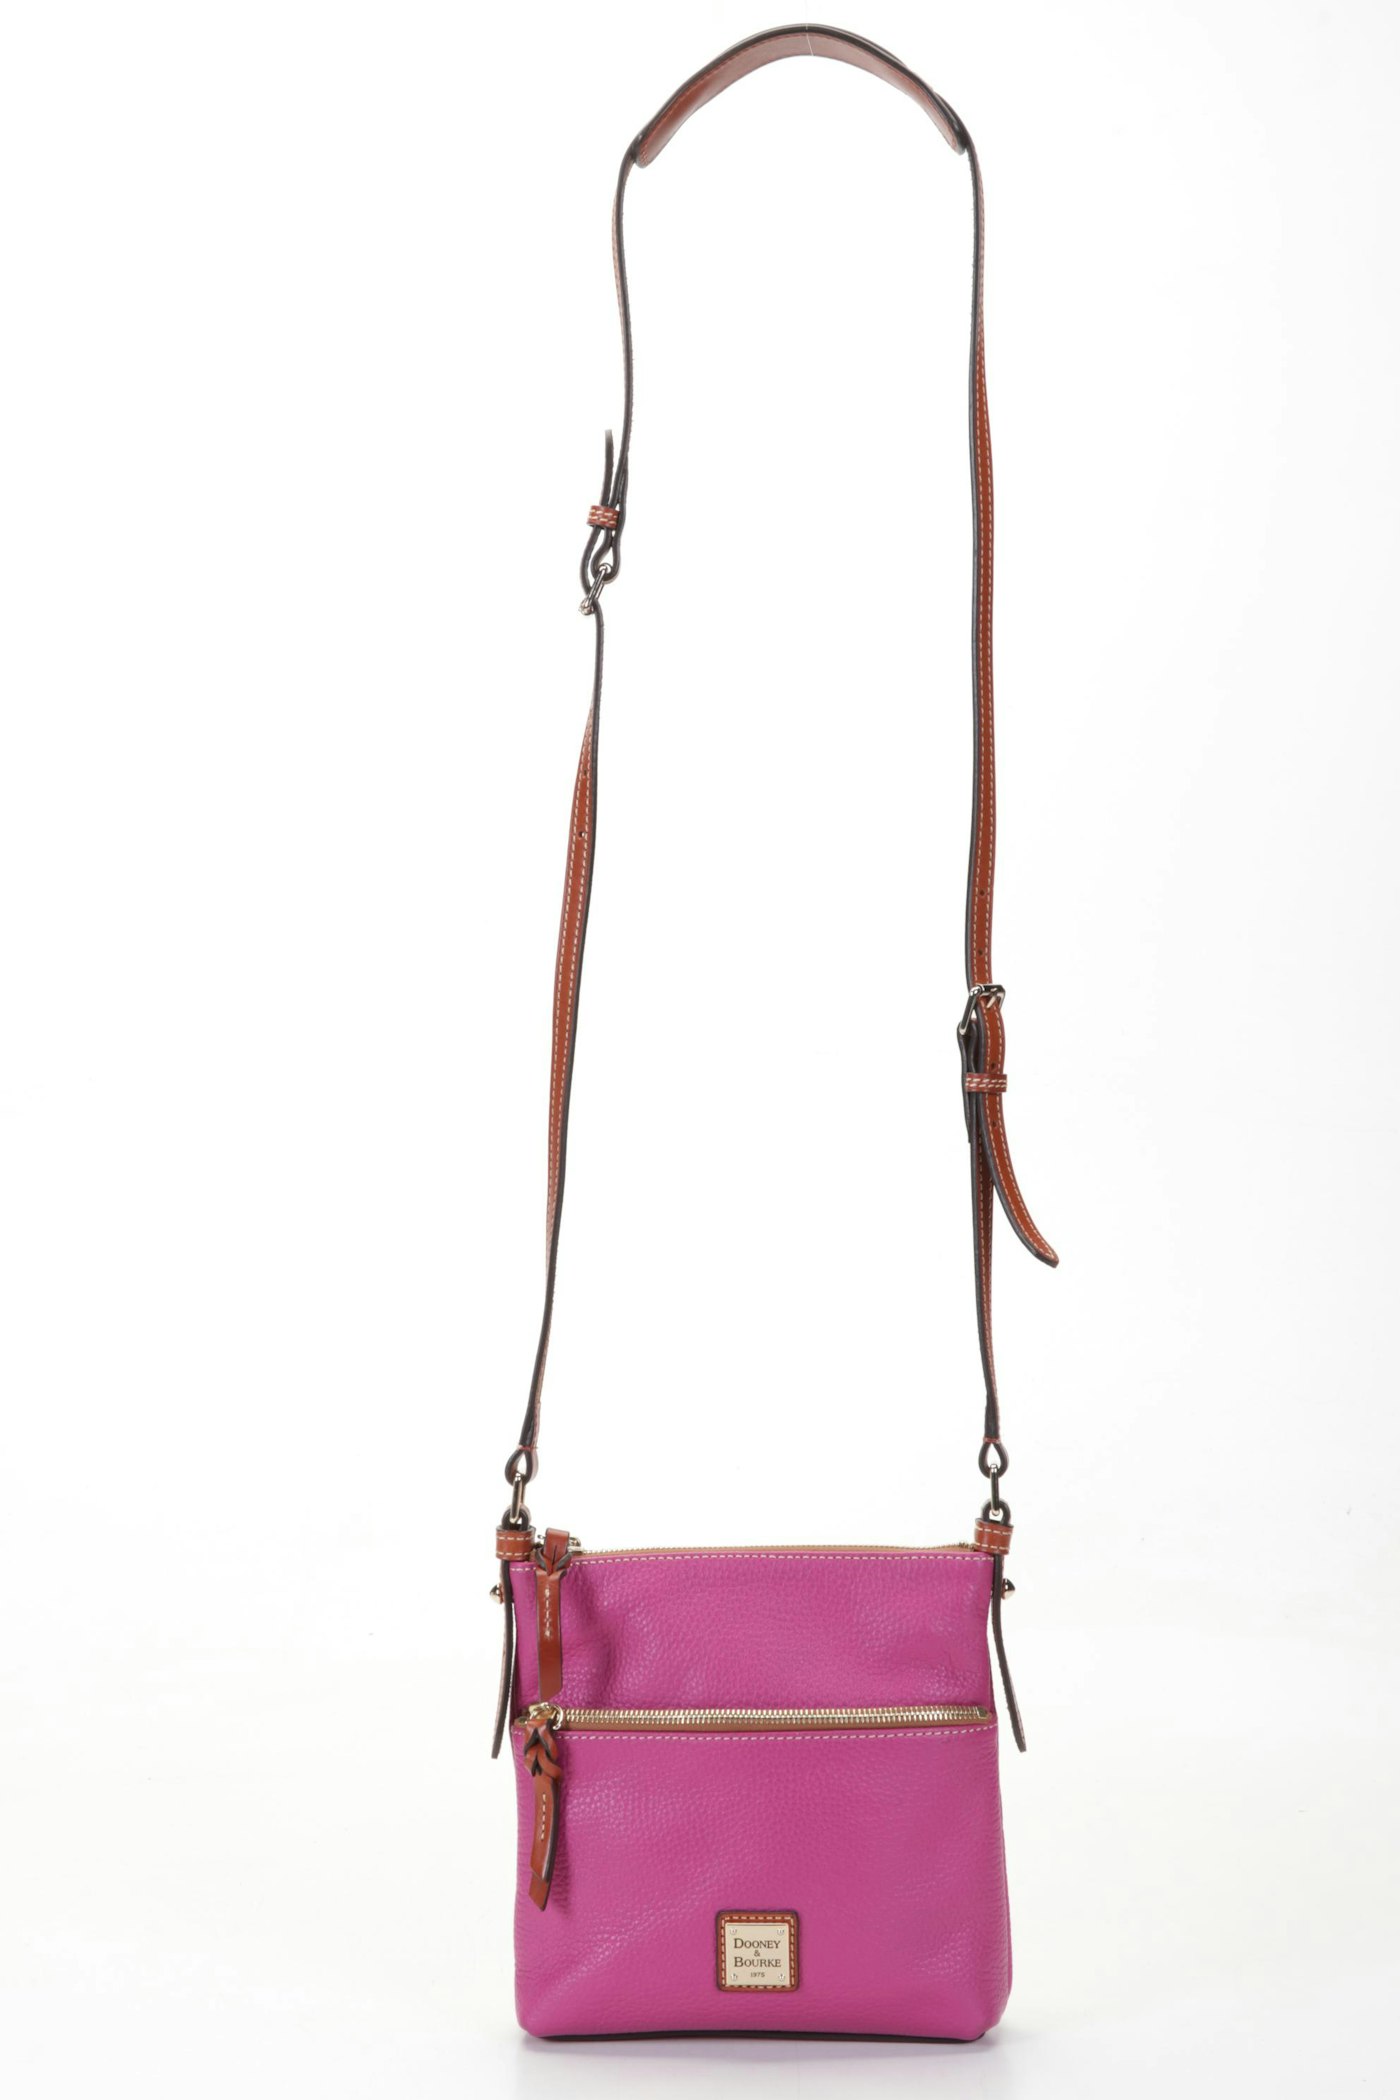 Dooney & Bourke Crossbody Bag in Pink Pebbled Leather | EBTH